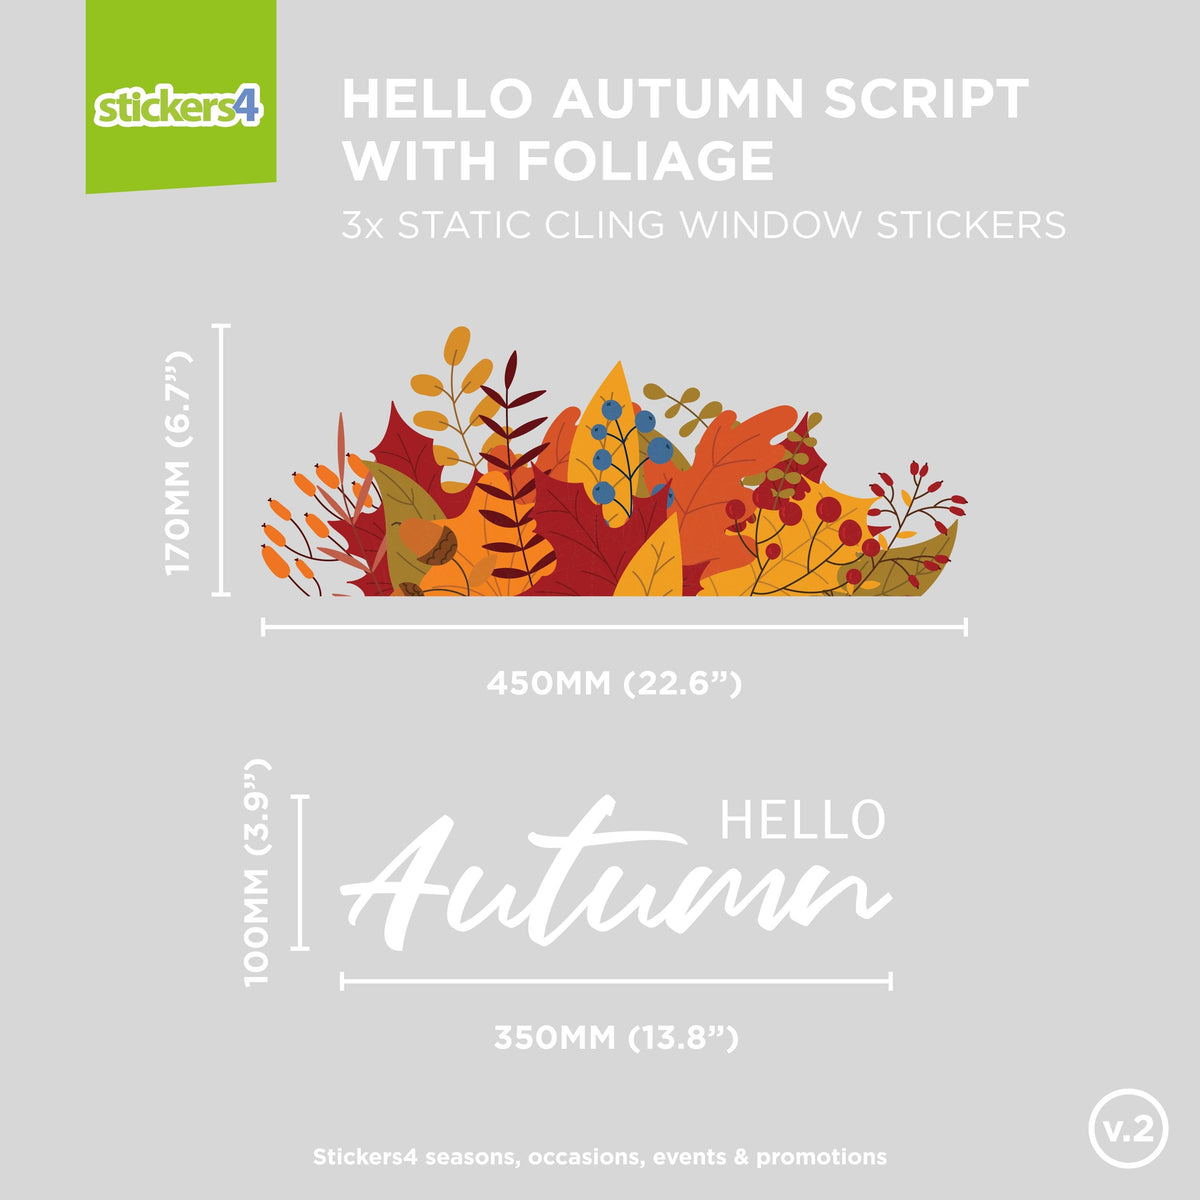 Hello Autumn Script with Foliage Window Stickers Autumn Window Display